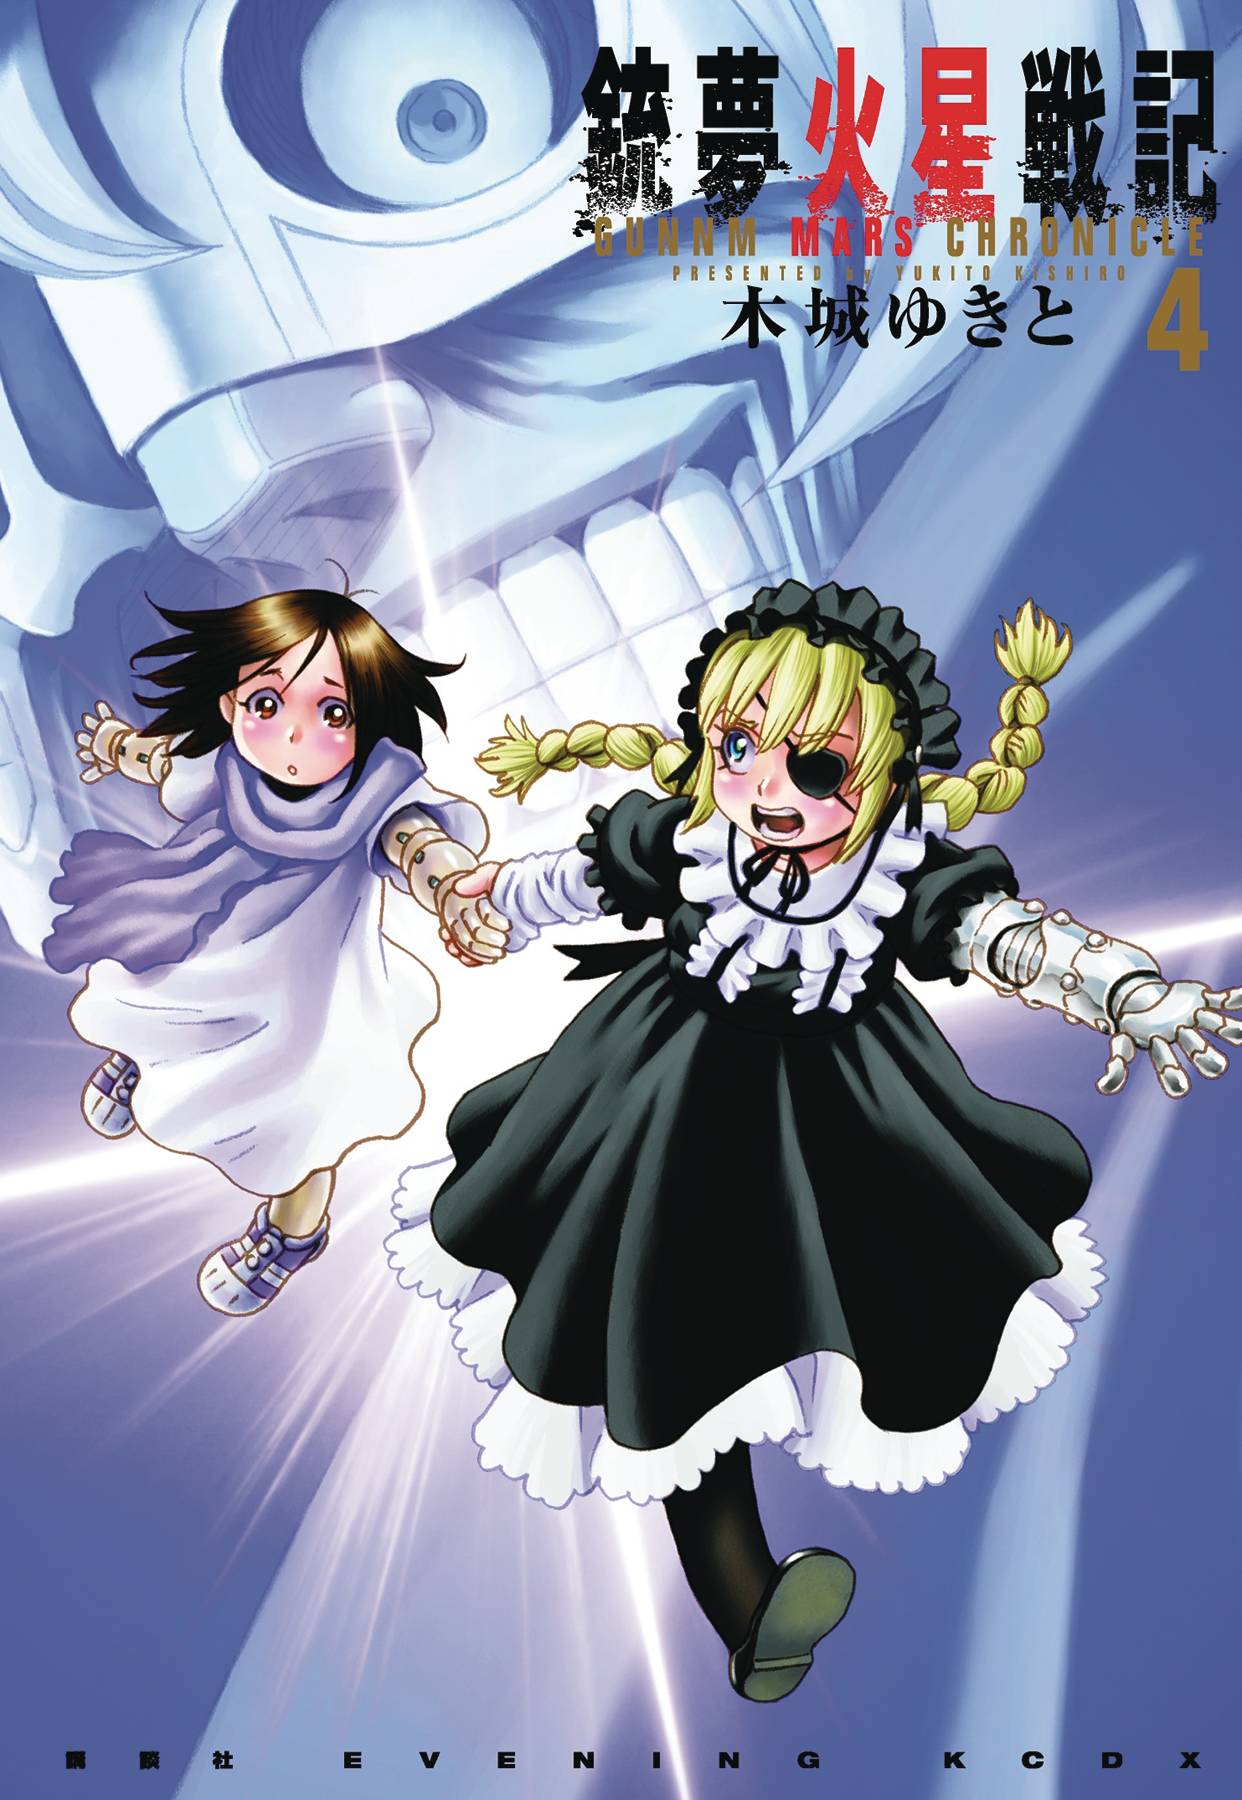 Battle Angel Alita Mars Chronicle Manga Volume 4